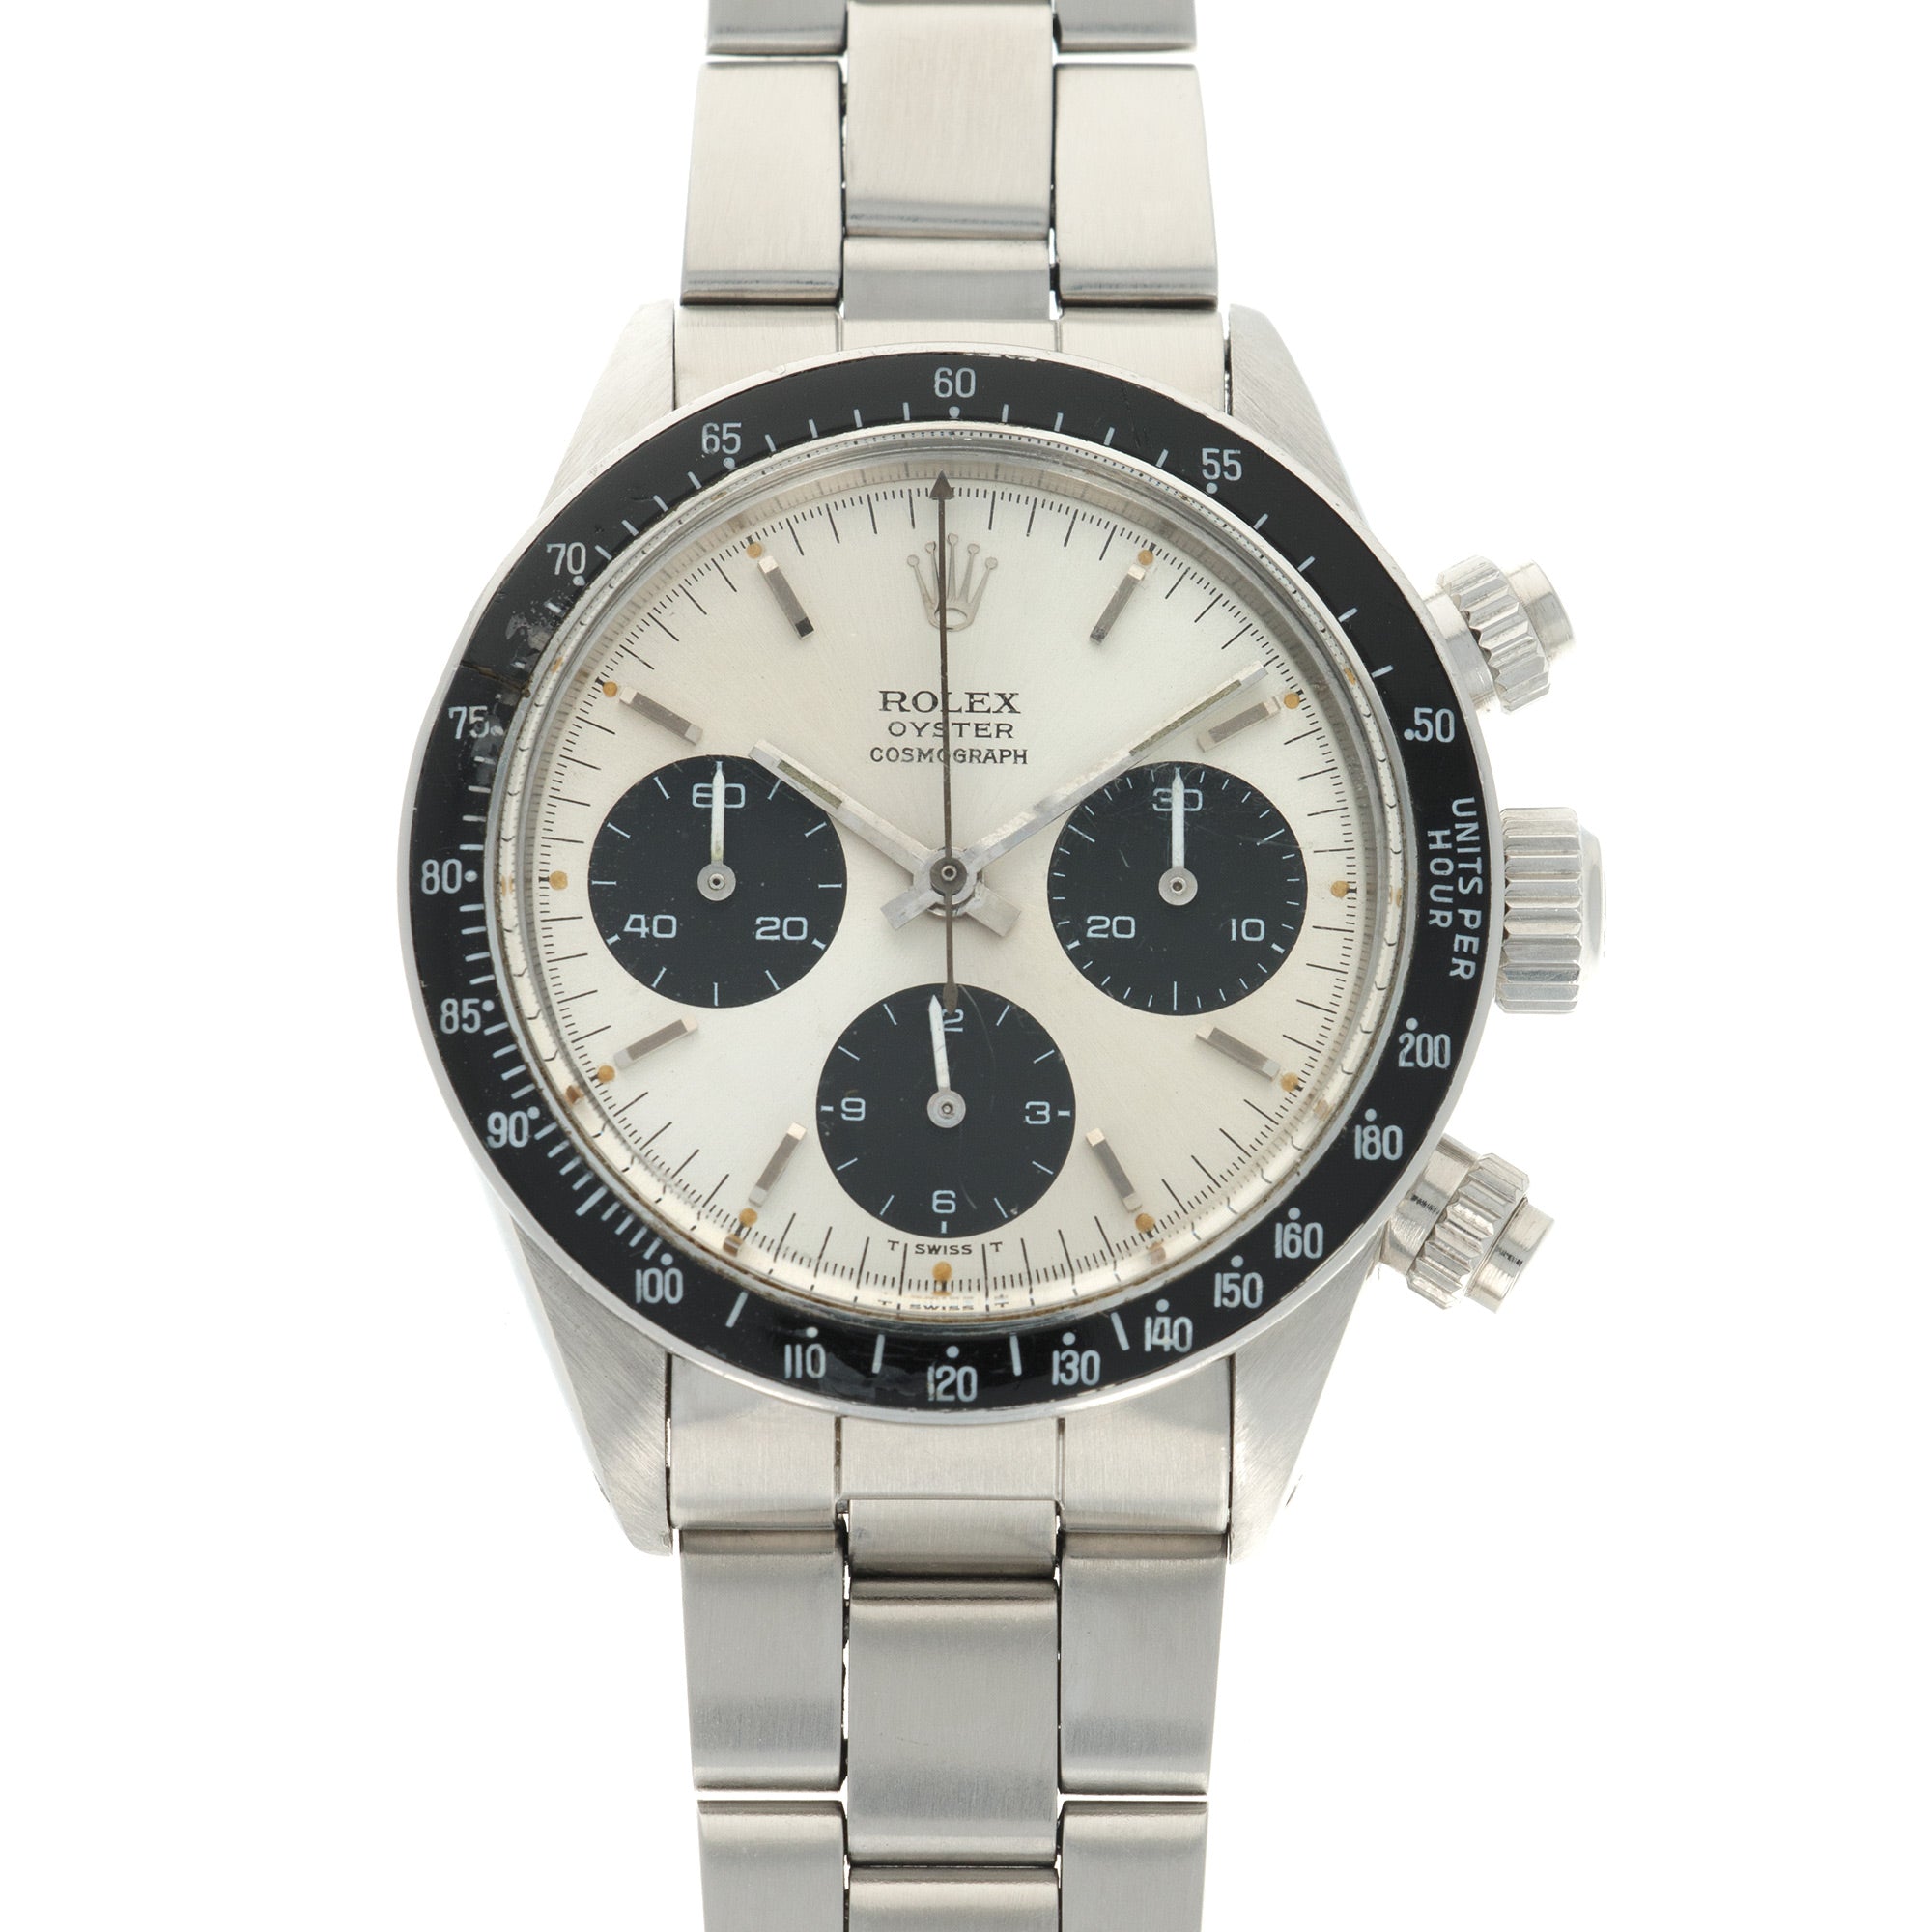 Rolex - Rolex Oyster Cosmograph Daytona Watch Ref. 6263 - The Keystone Watches